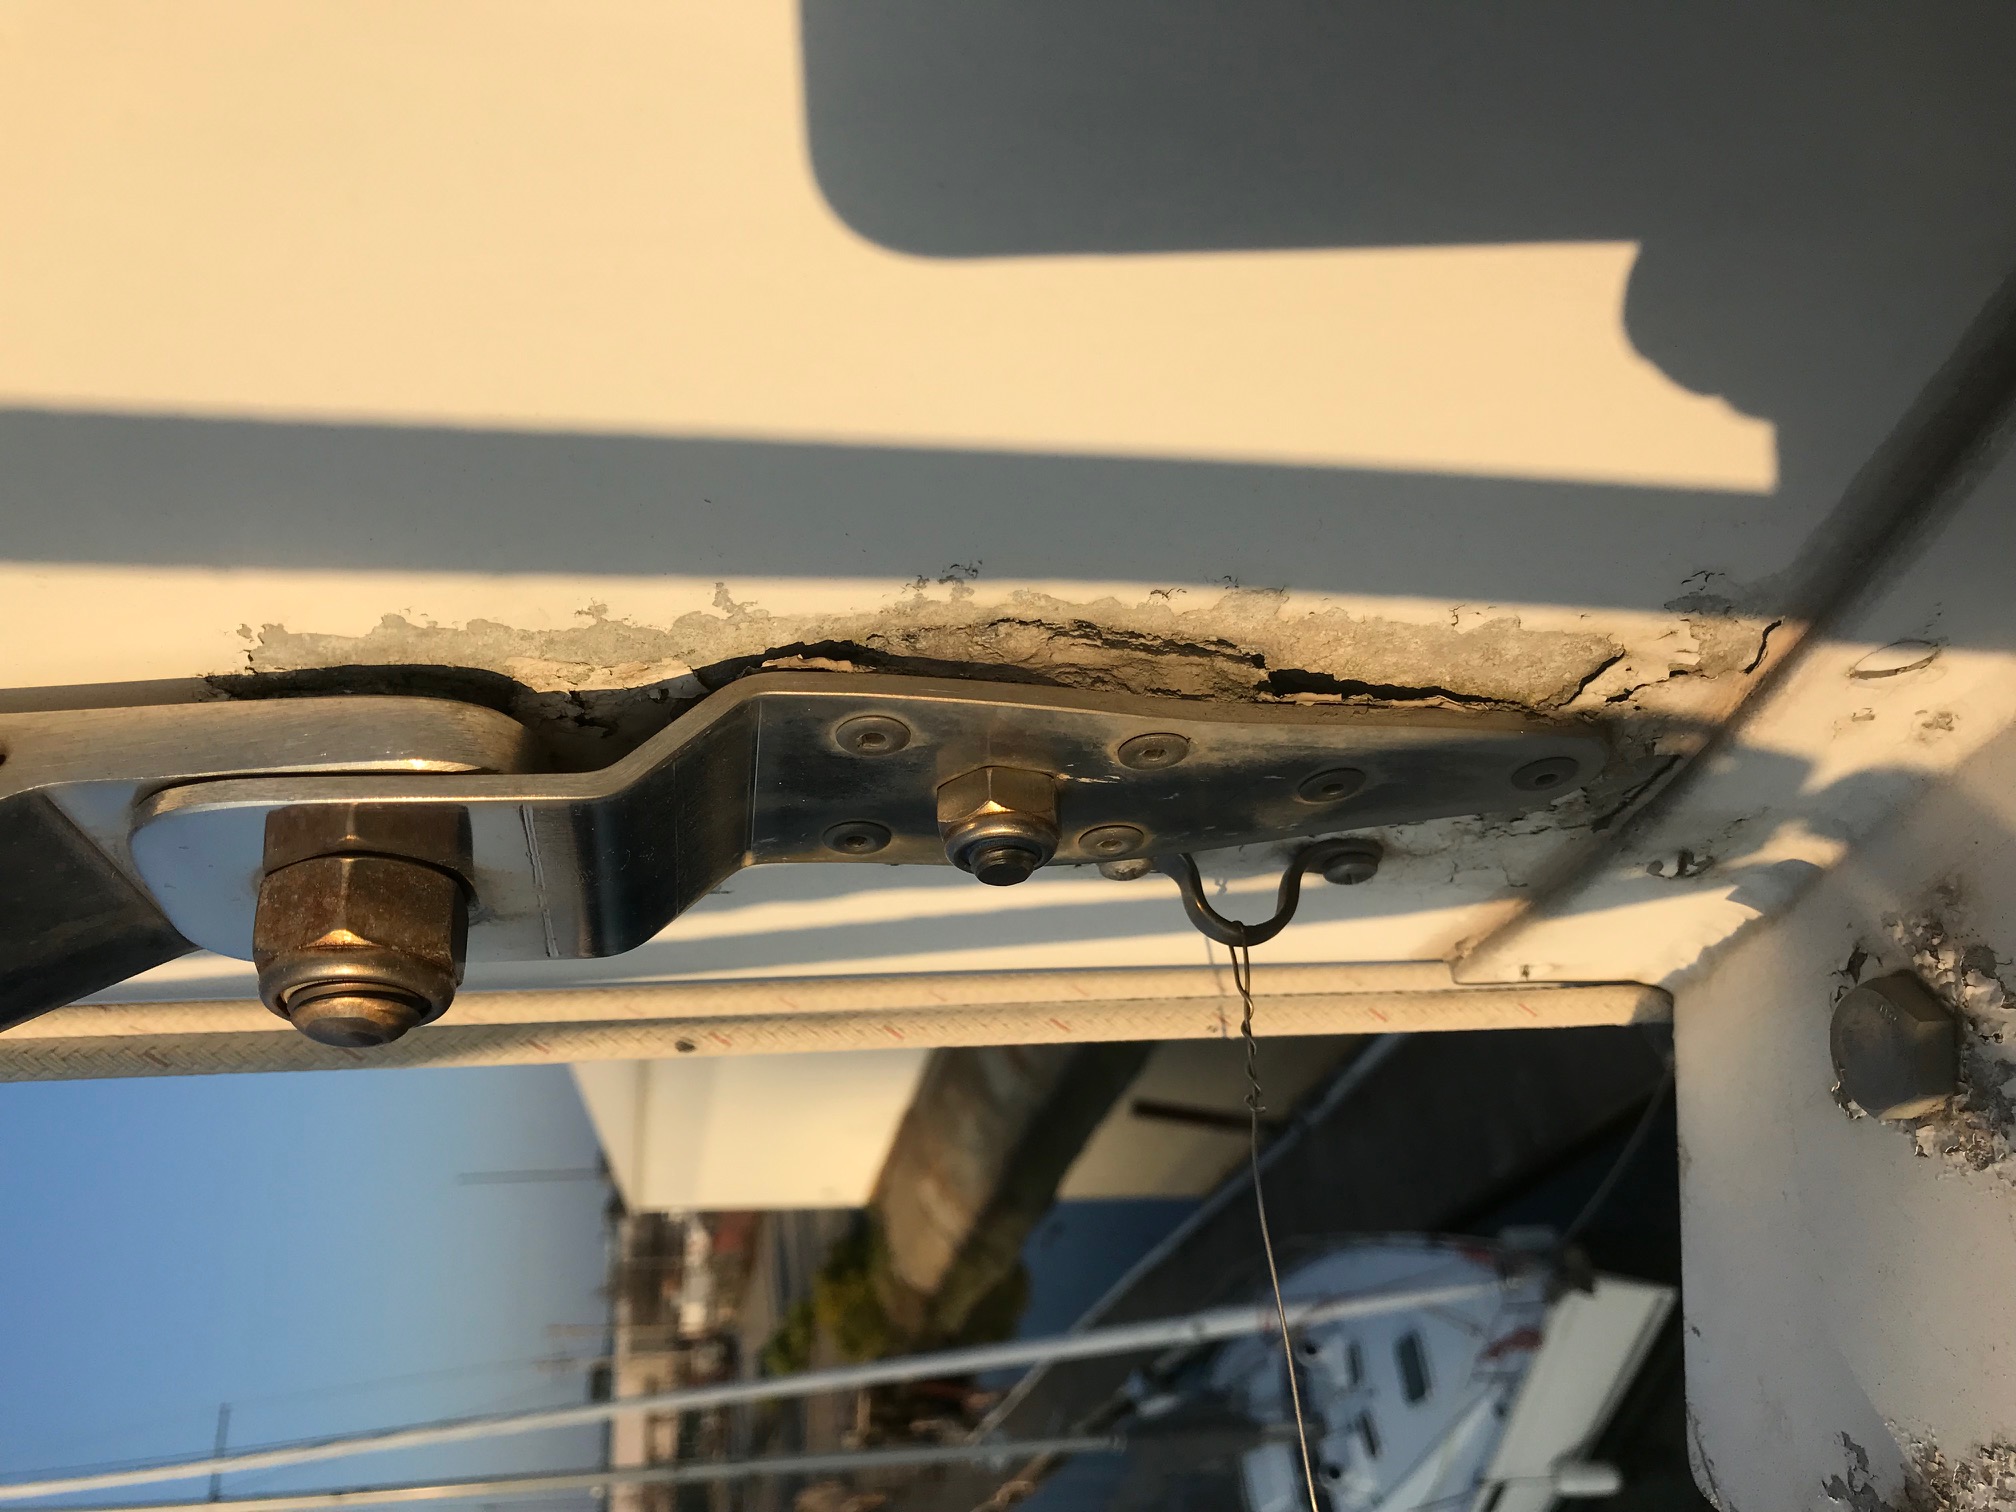 mast corrosion